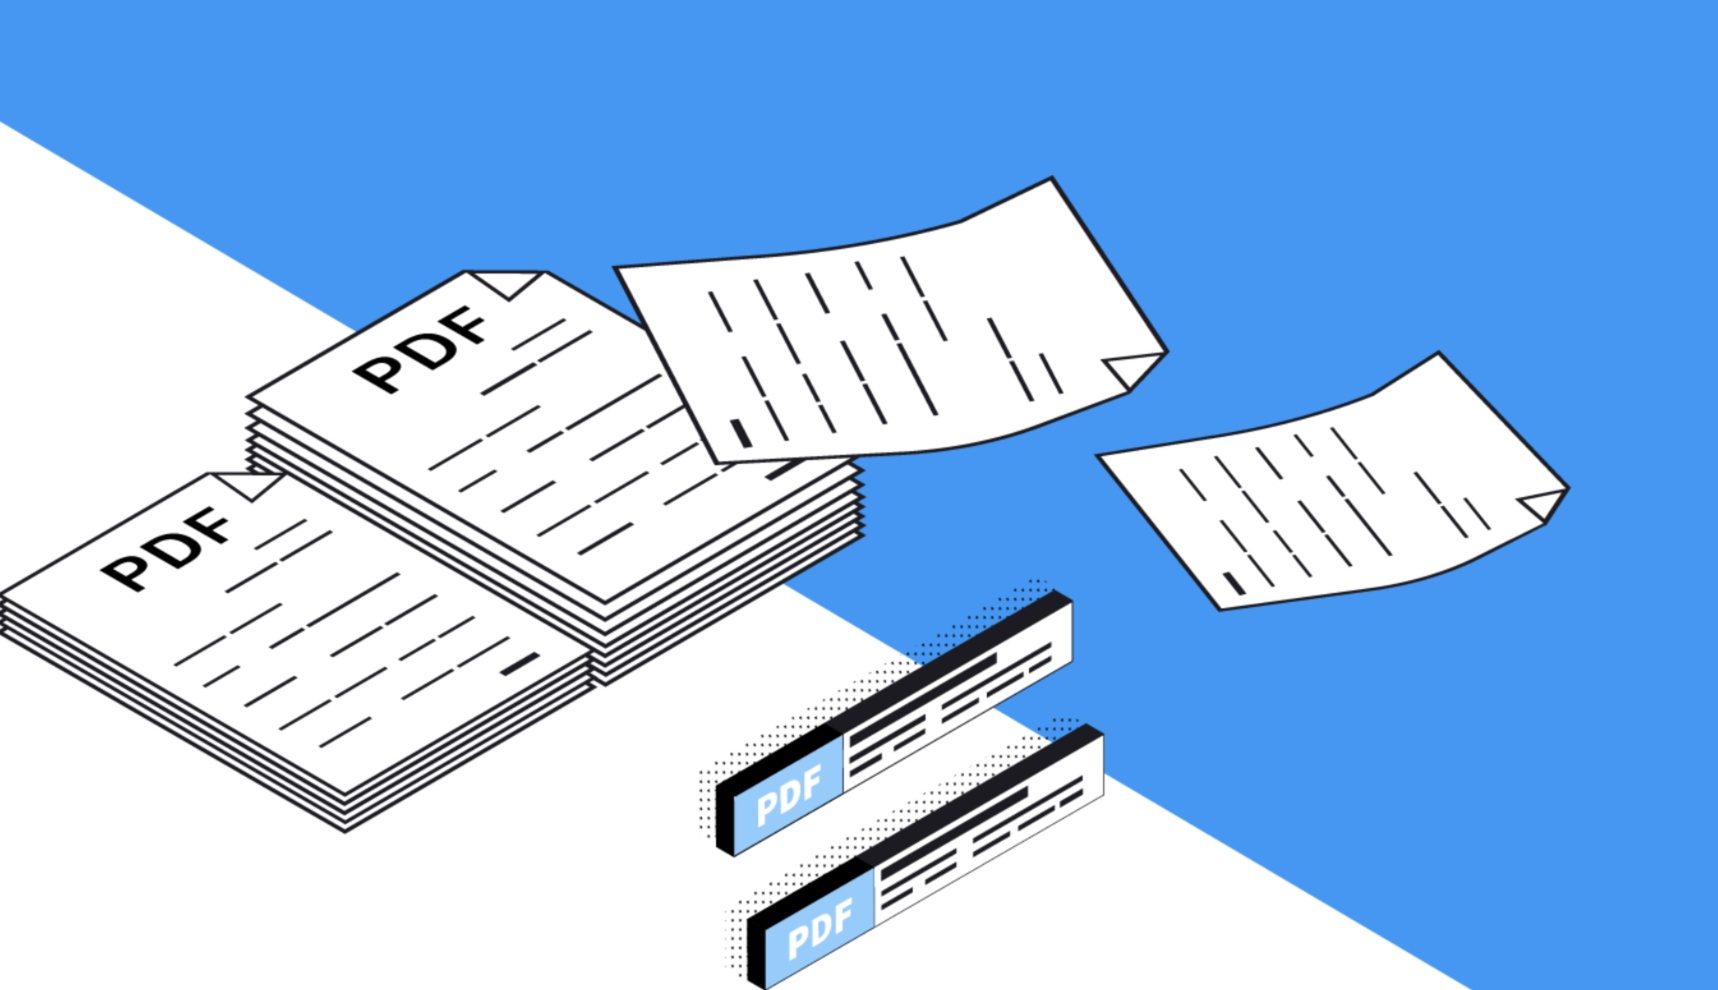 PDF file format: Internal Document Structure Explained